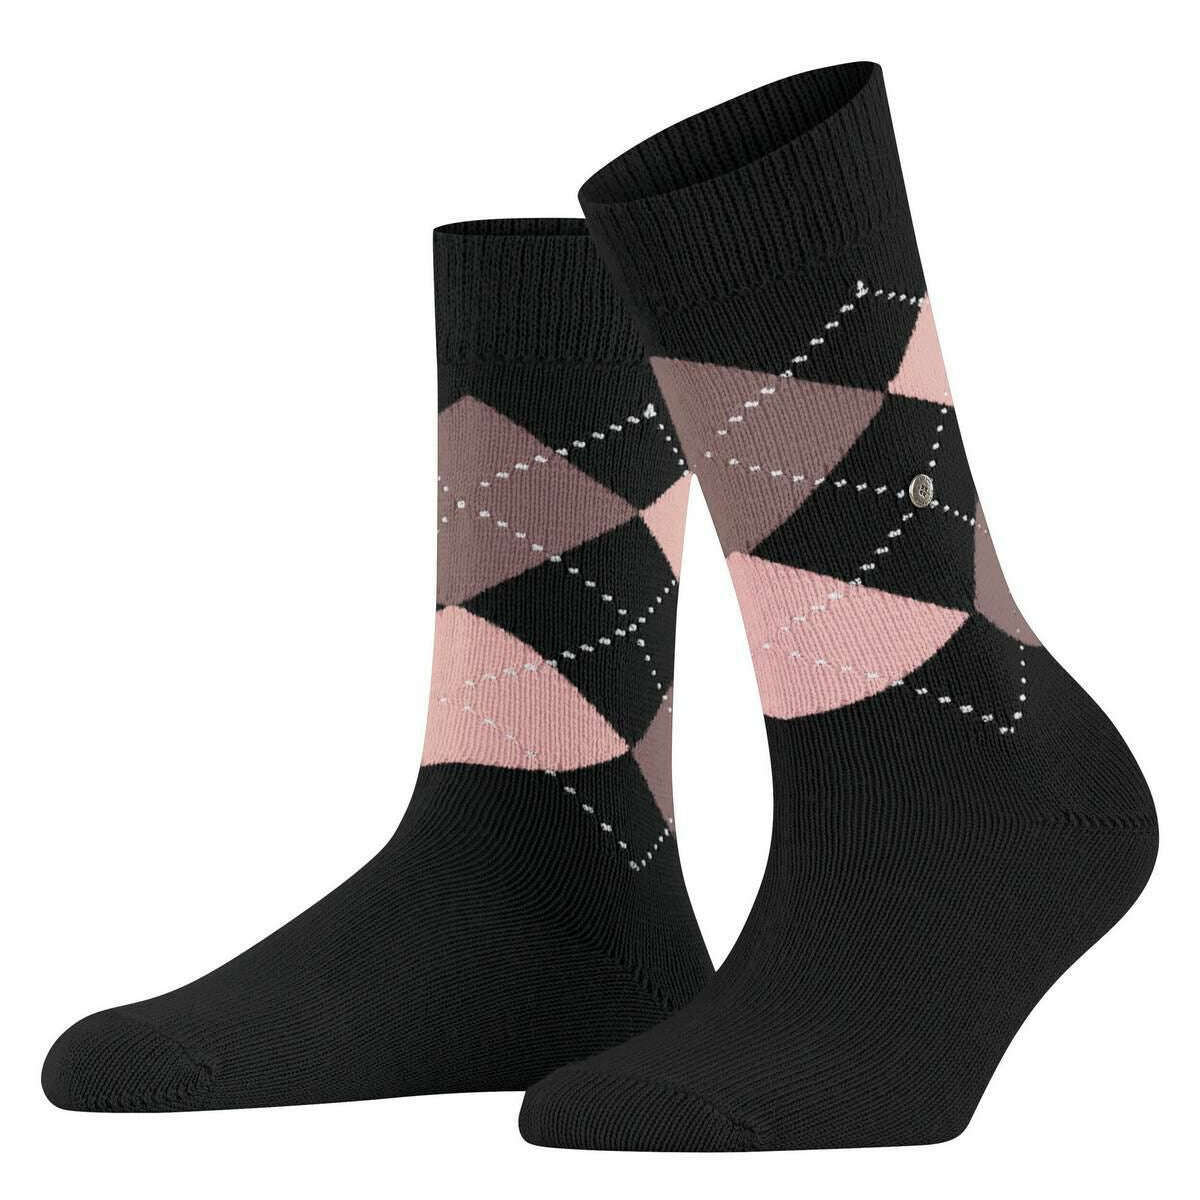 Burlington Whitby Socks - Anthracite Grey/Pink